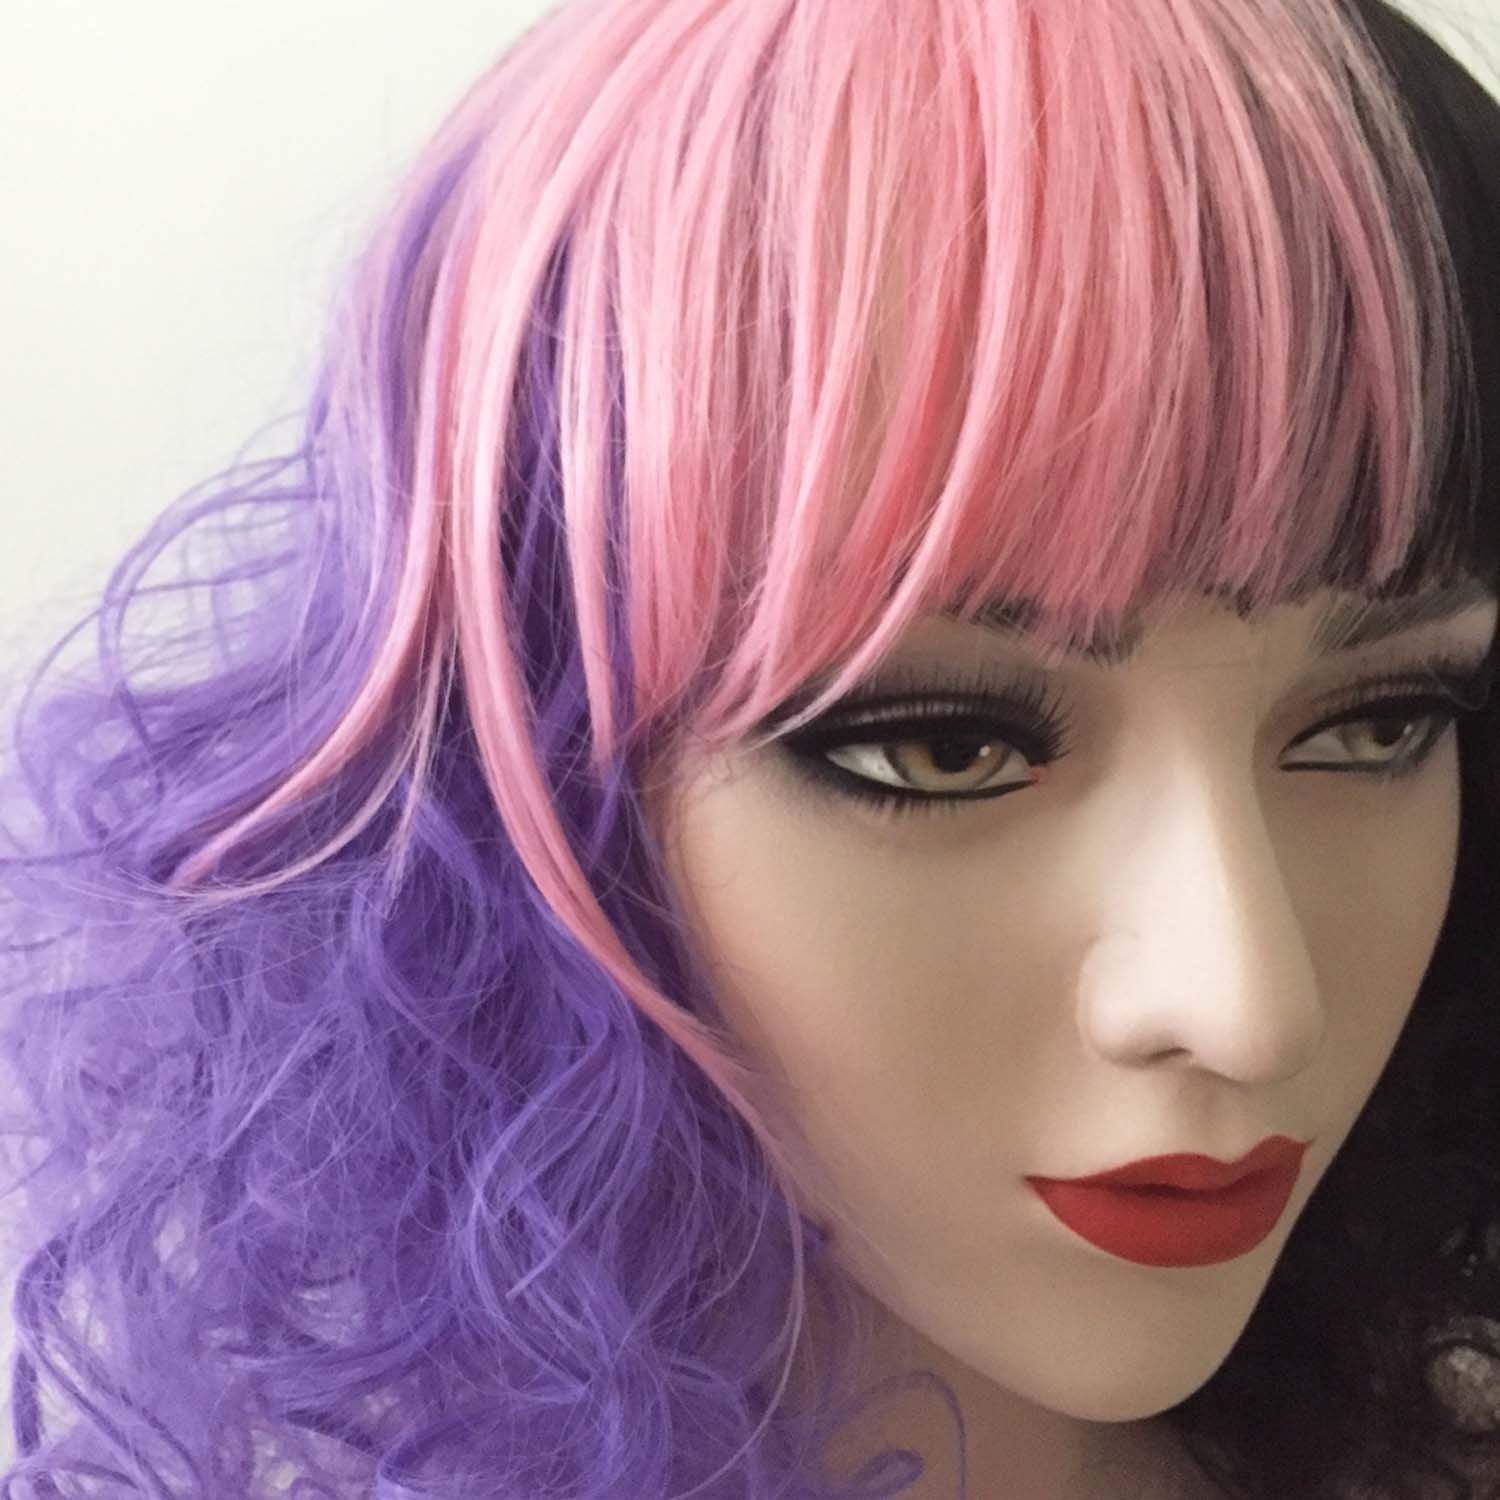 nevermindyrhead Women Purple Pink Black Long Curly Fringe Bangs Messy Wig